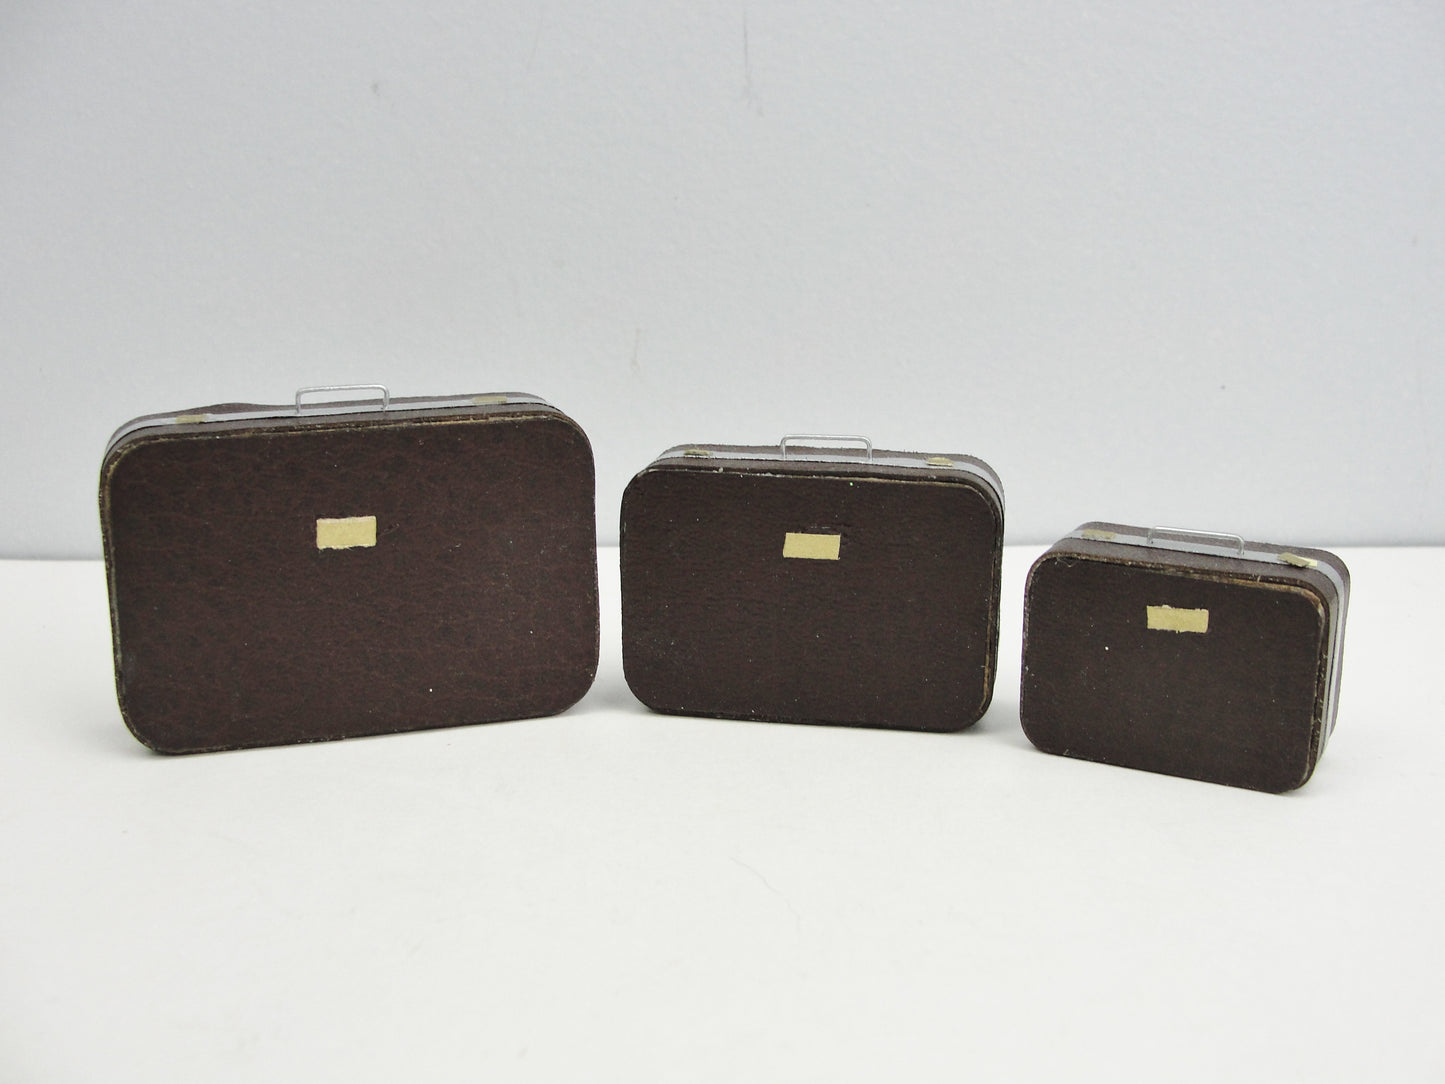 Miniature suitcase dollhouse accessories set of 3